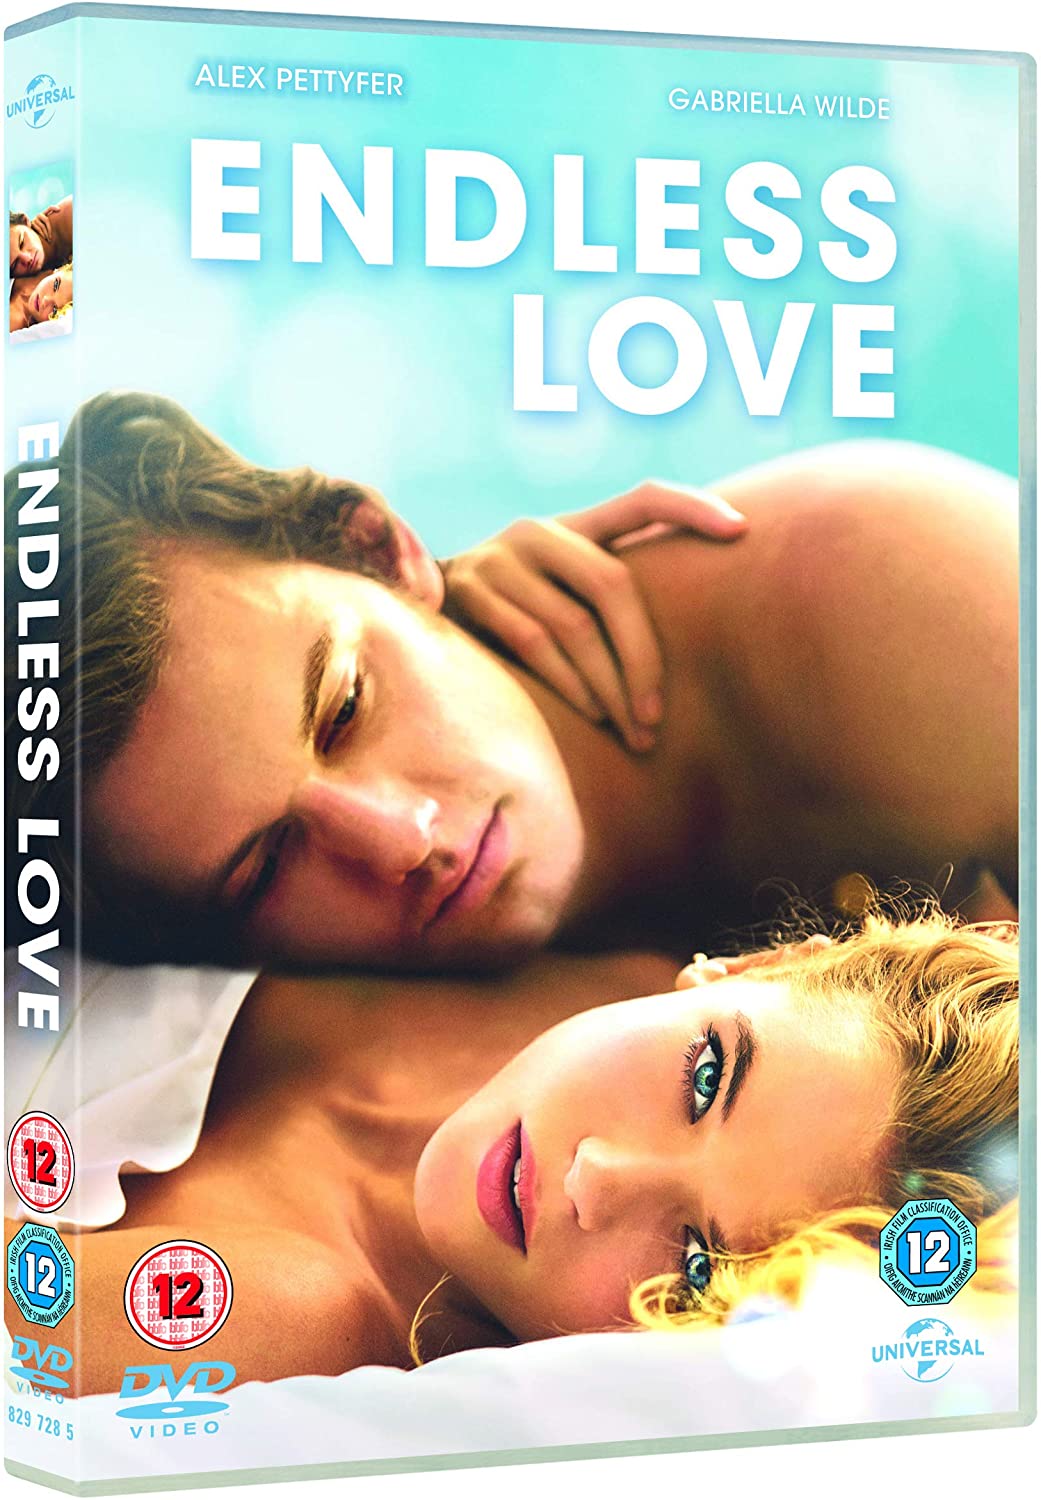 Endless Love [Romance] [2014] [DVD]